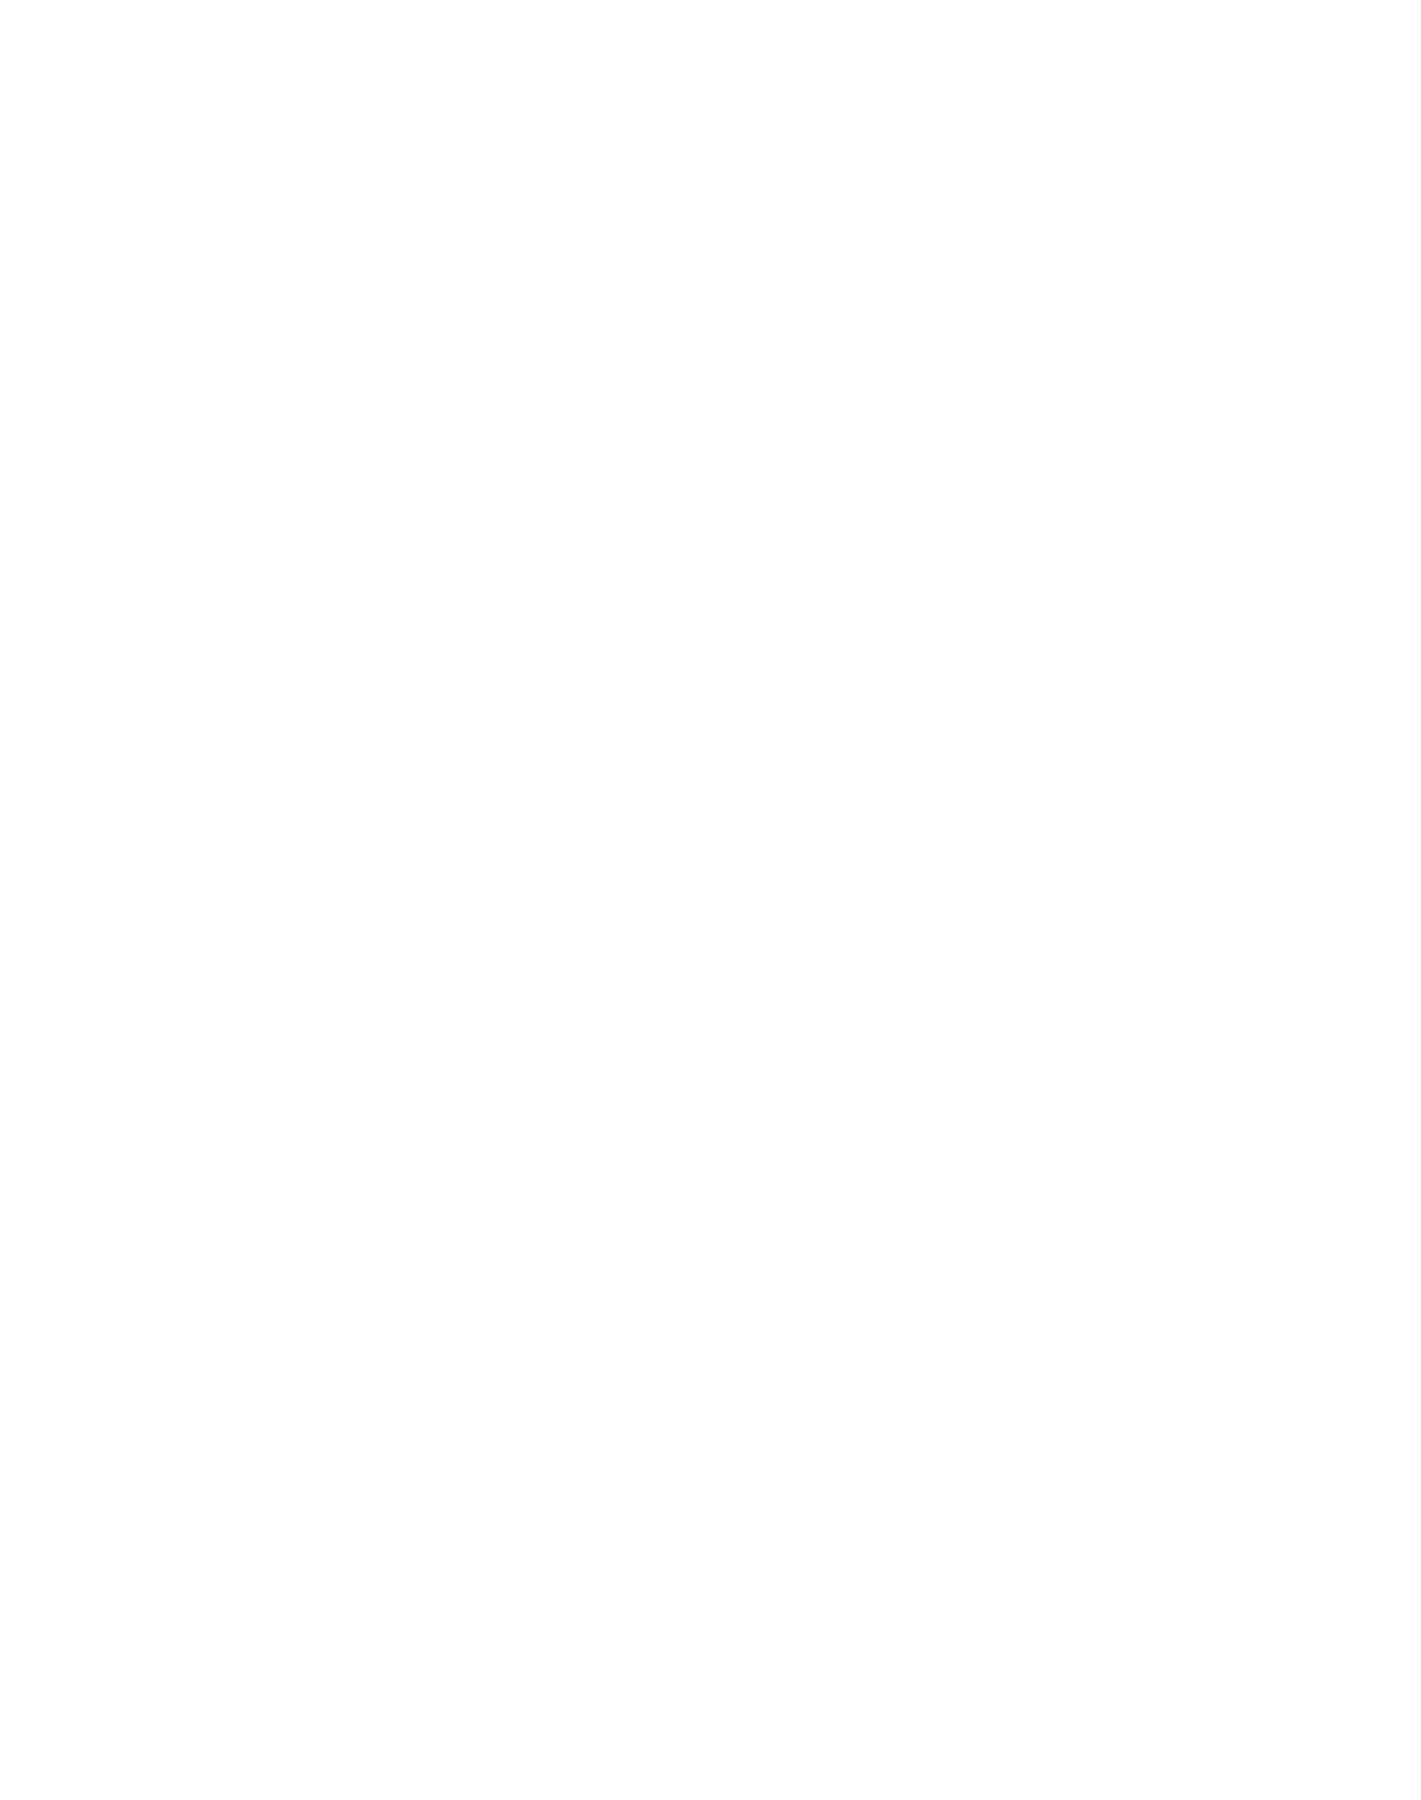 Burnaby Rotary logo